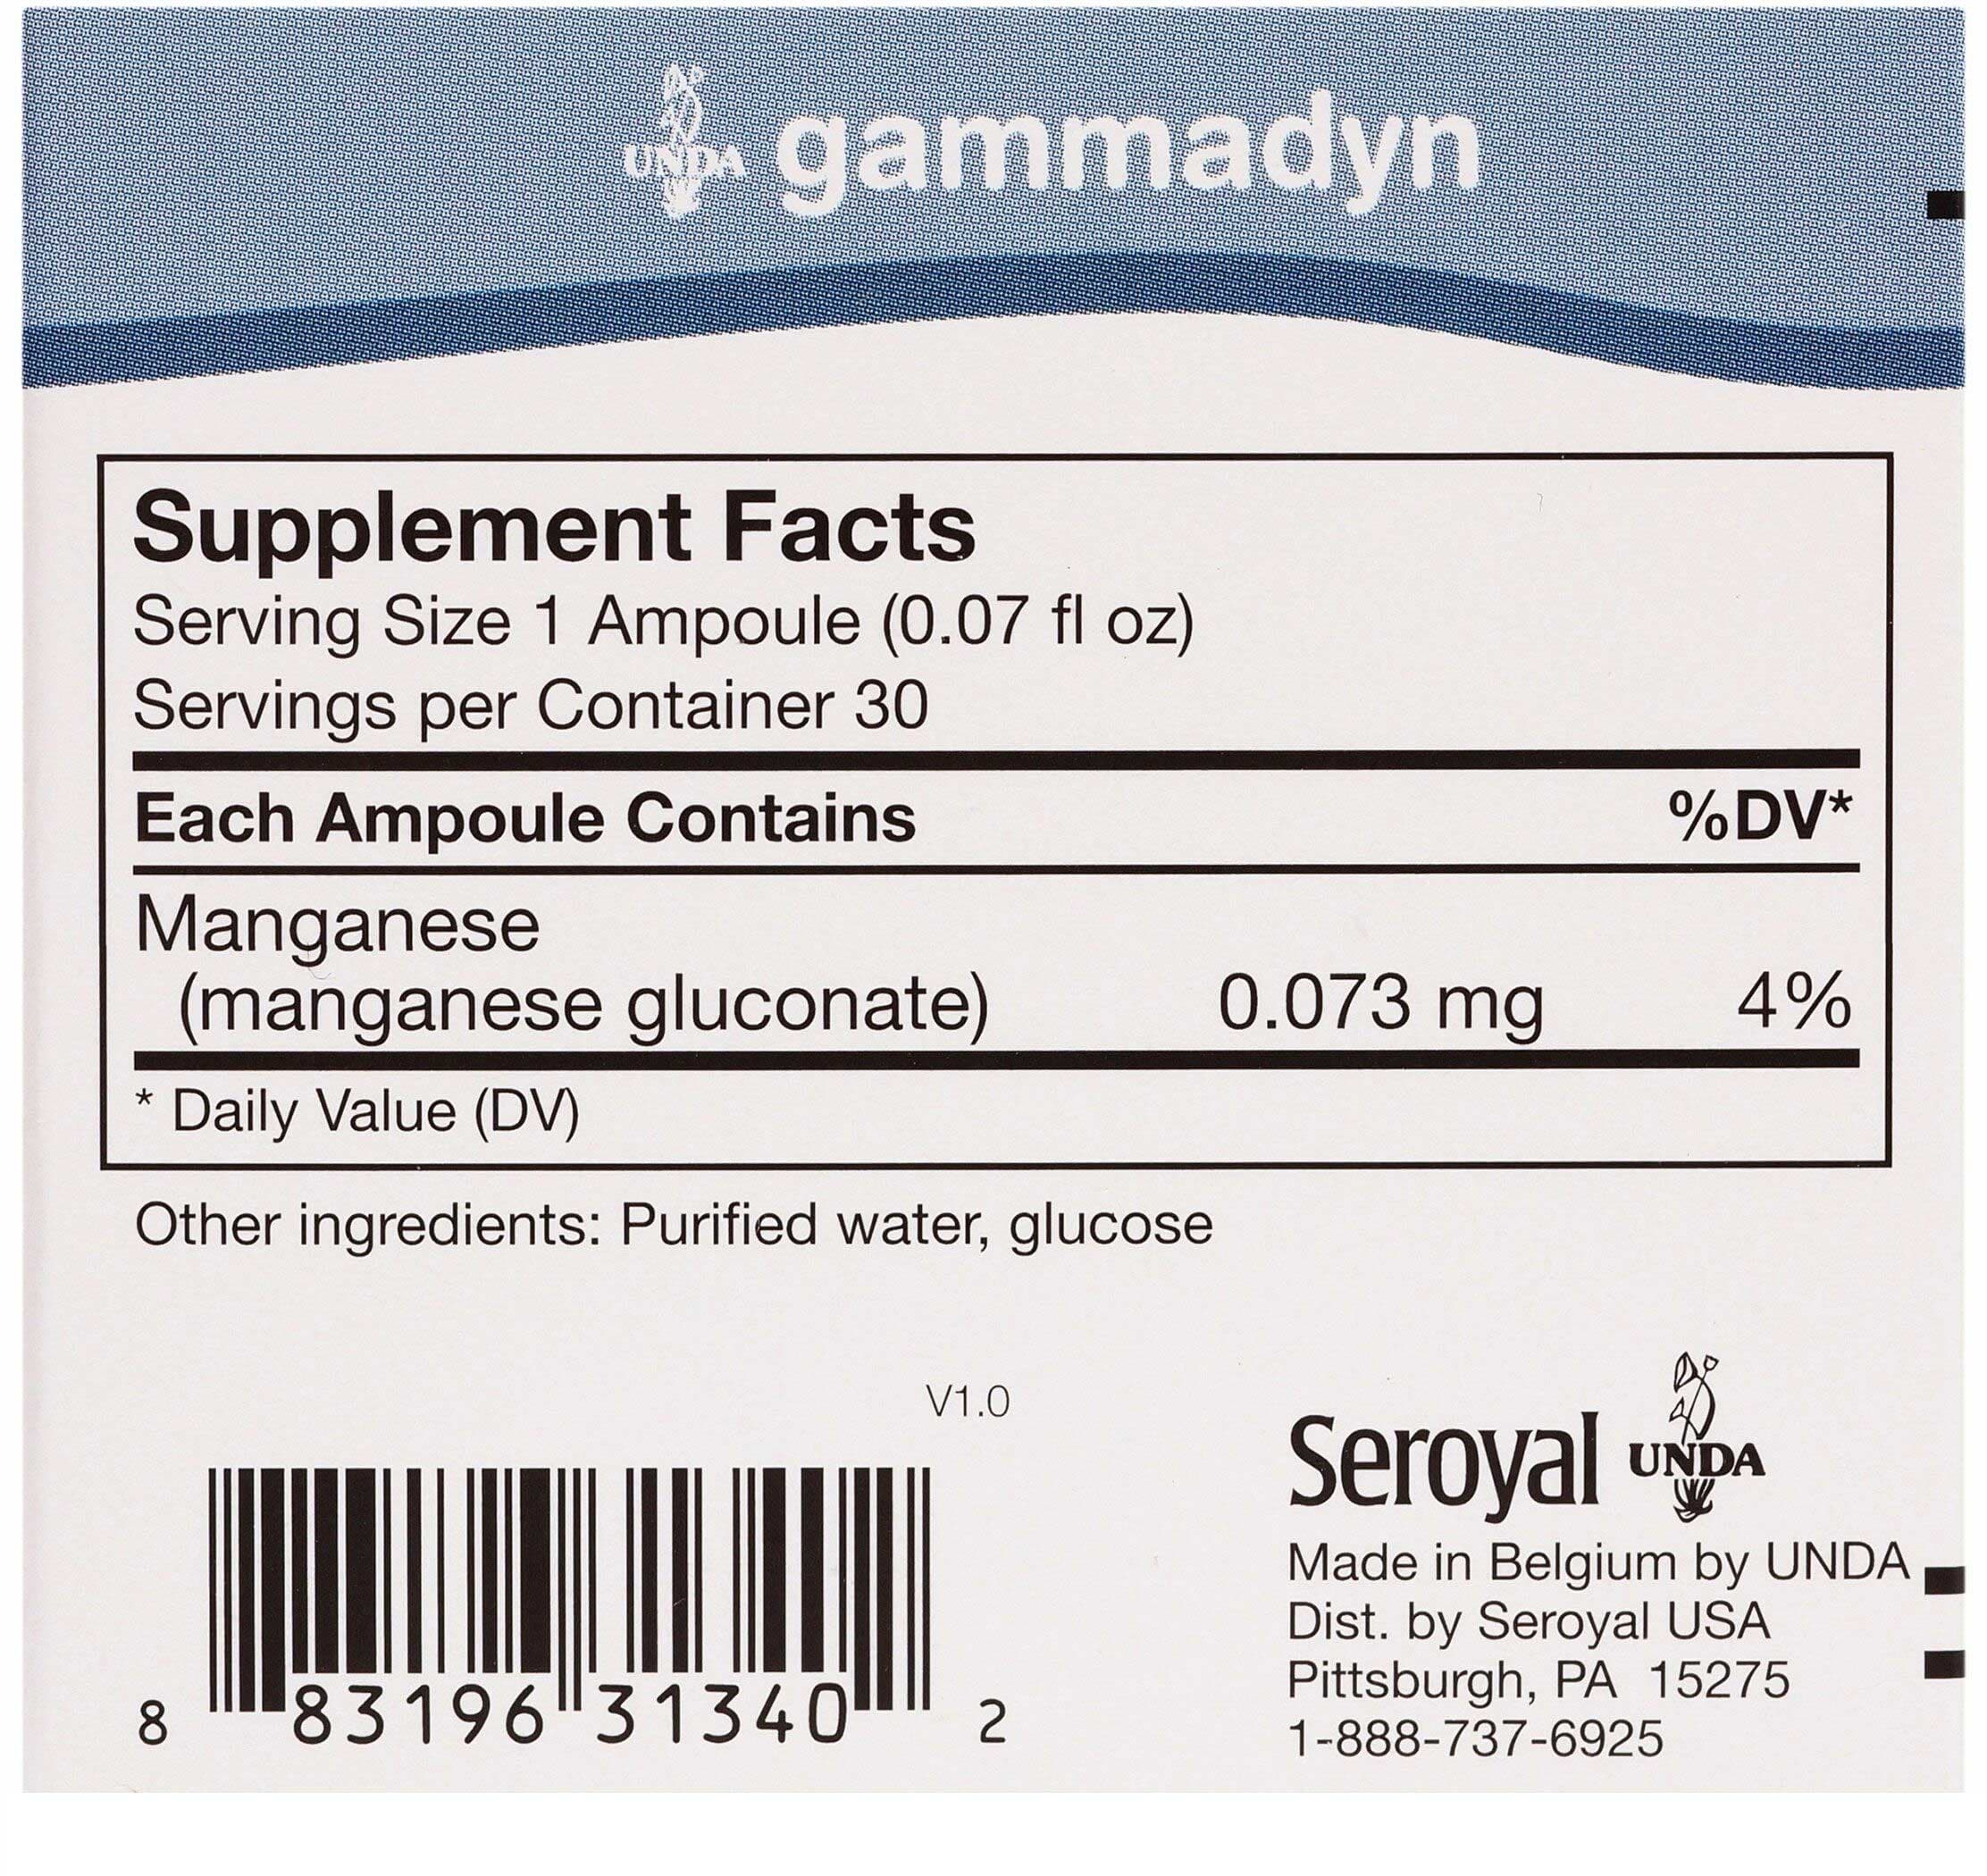 UNDA Gammadyn Mn Ingredients